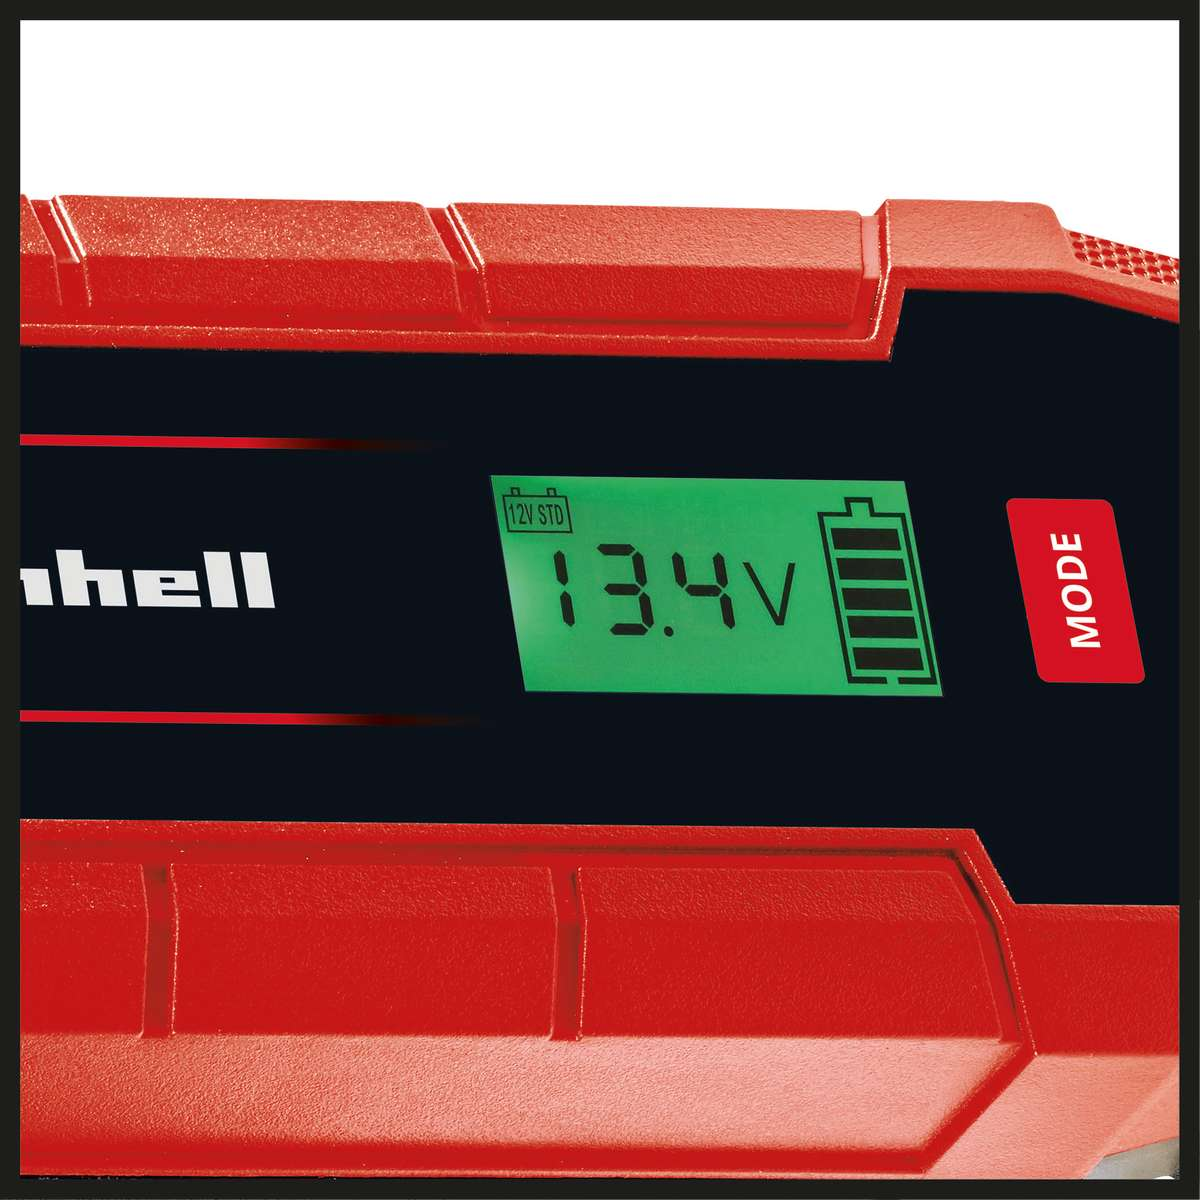 EINHELL CE-BC 6 M Rot Autobatterie Ladegerät